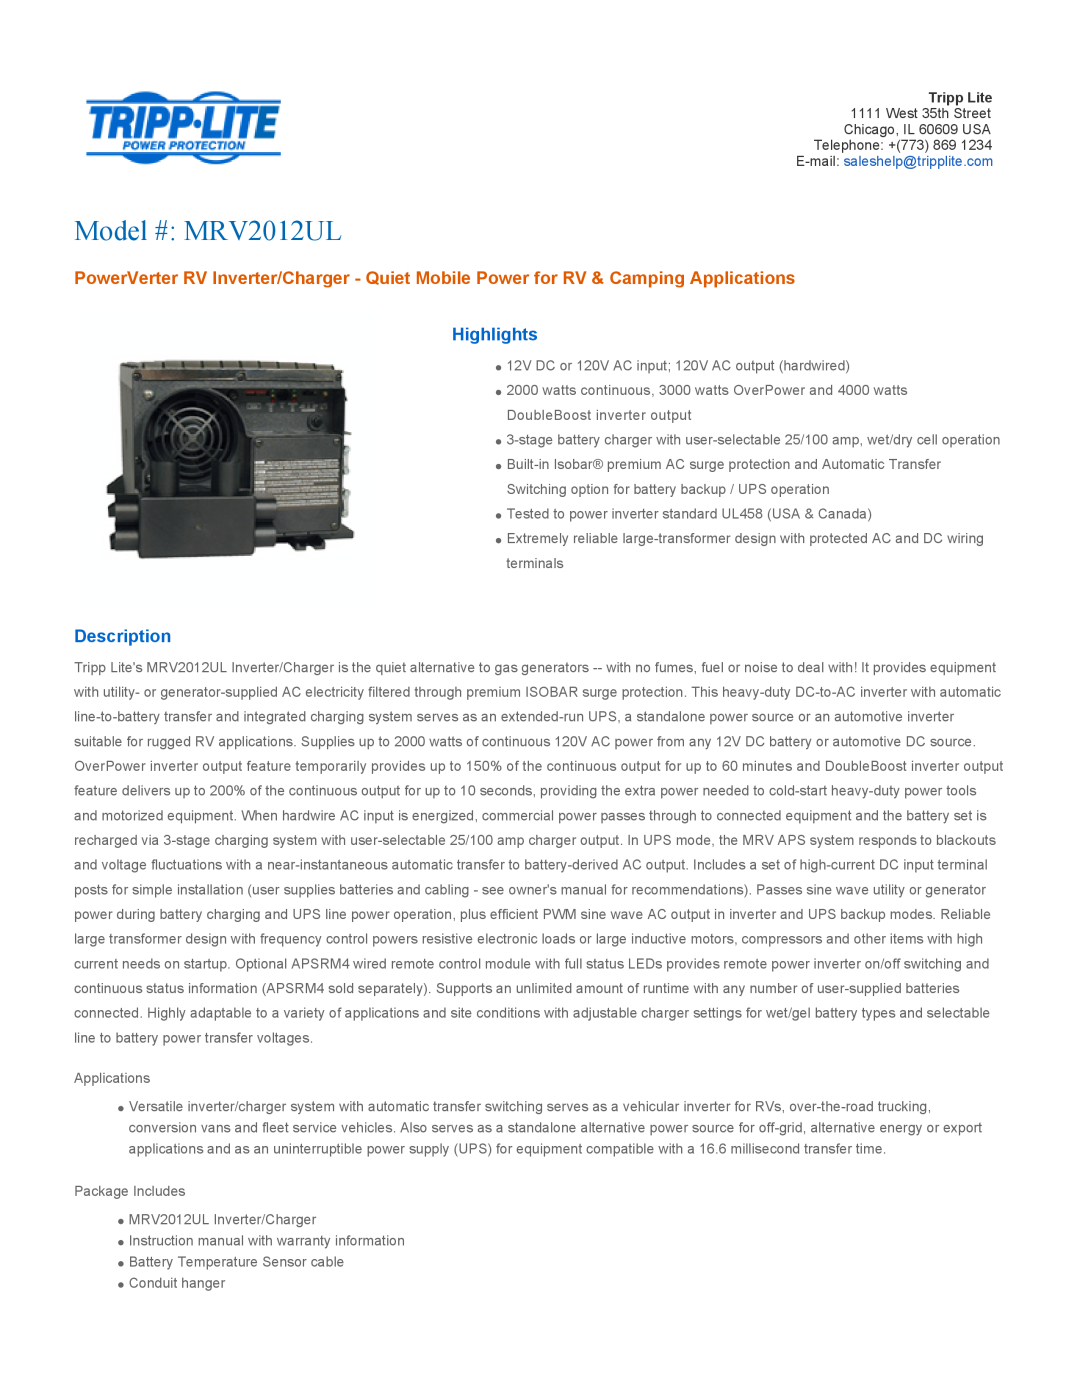 Tripp Lite owner manual Highlights, Description, Model # MRV2012UL 